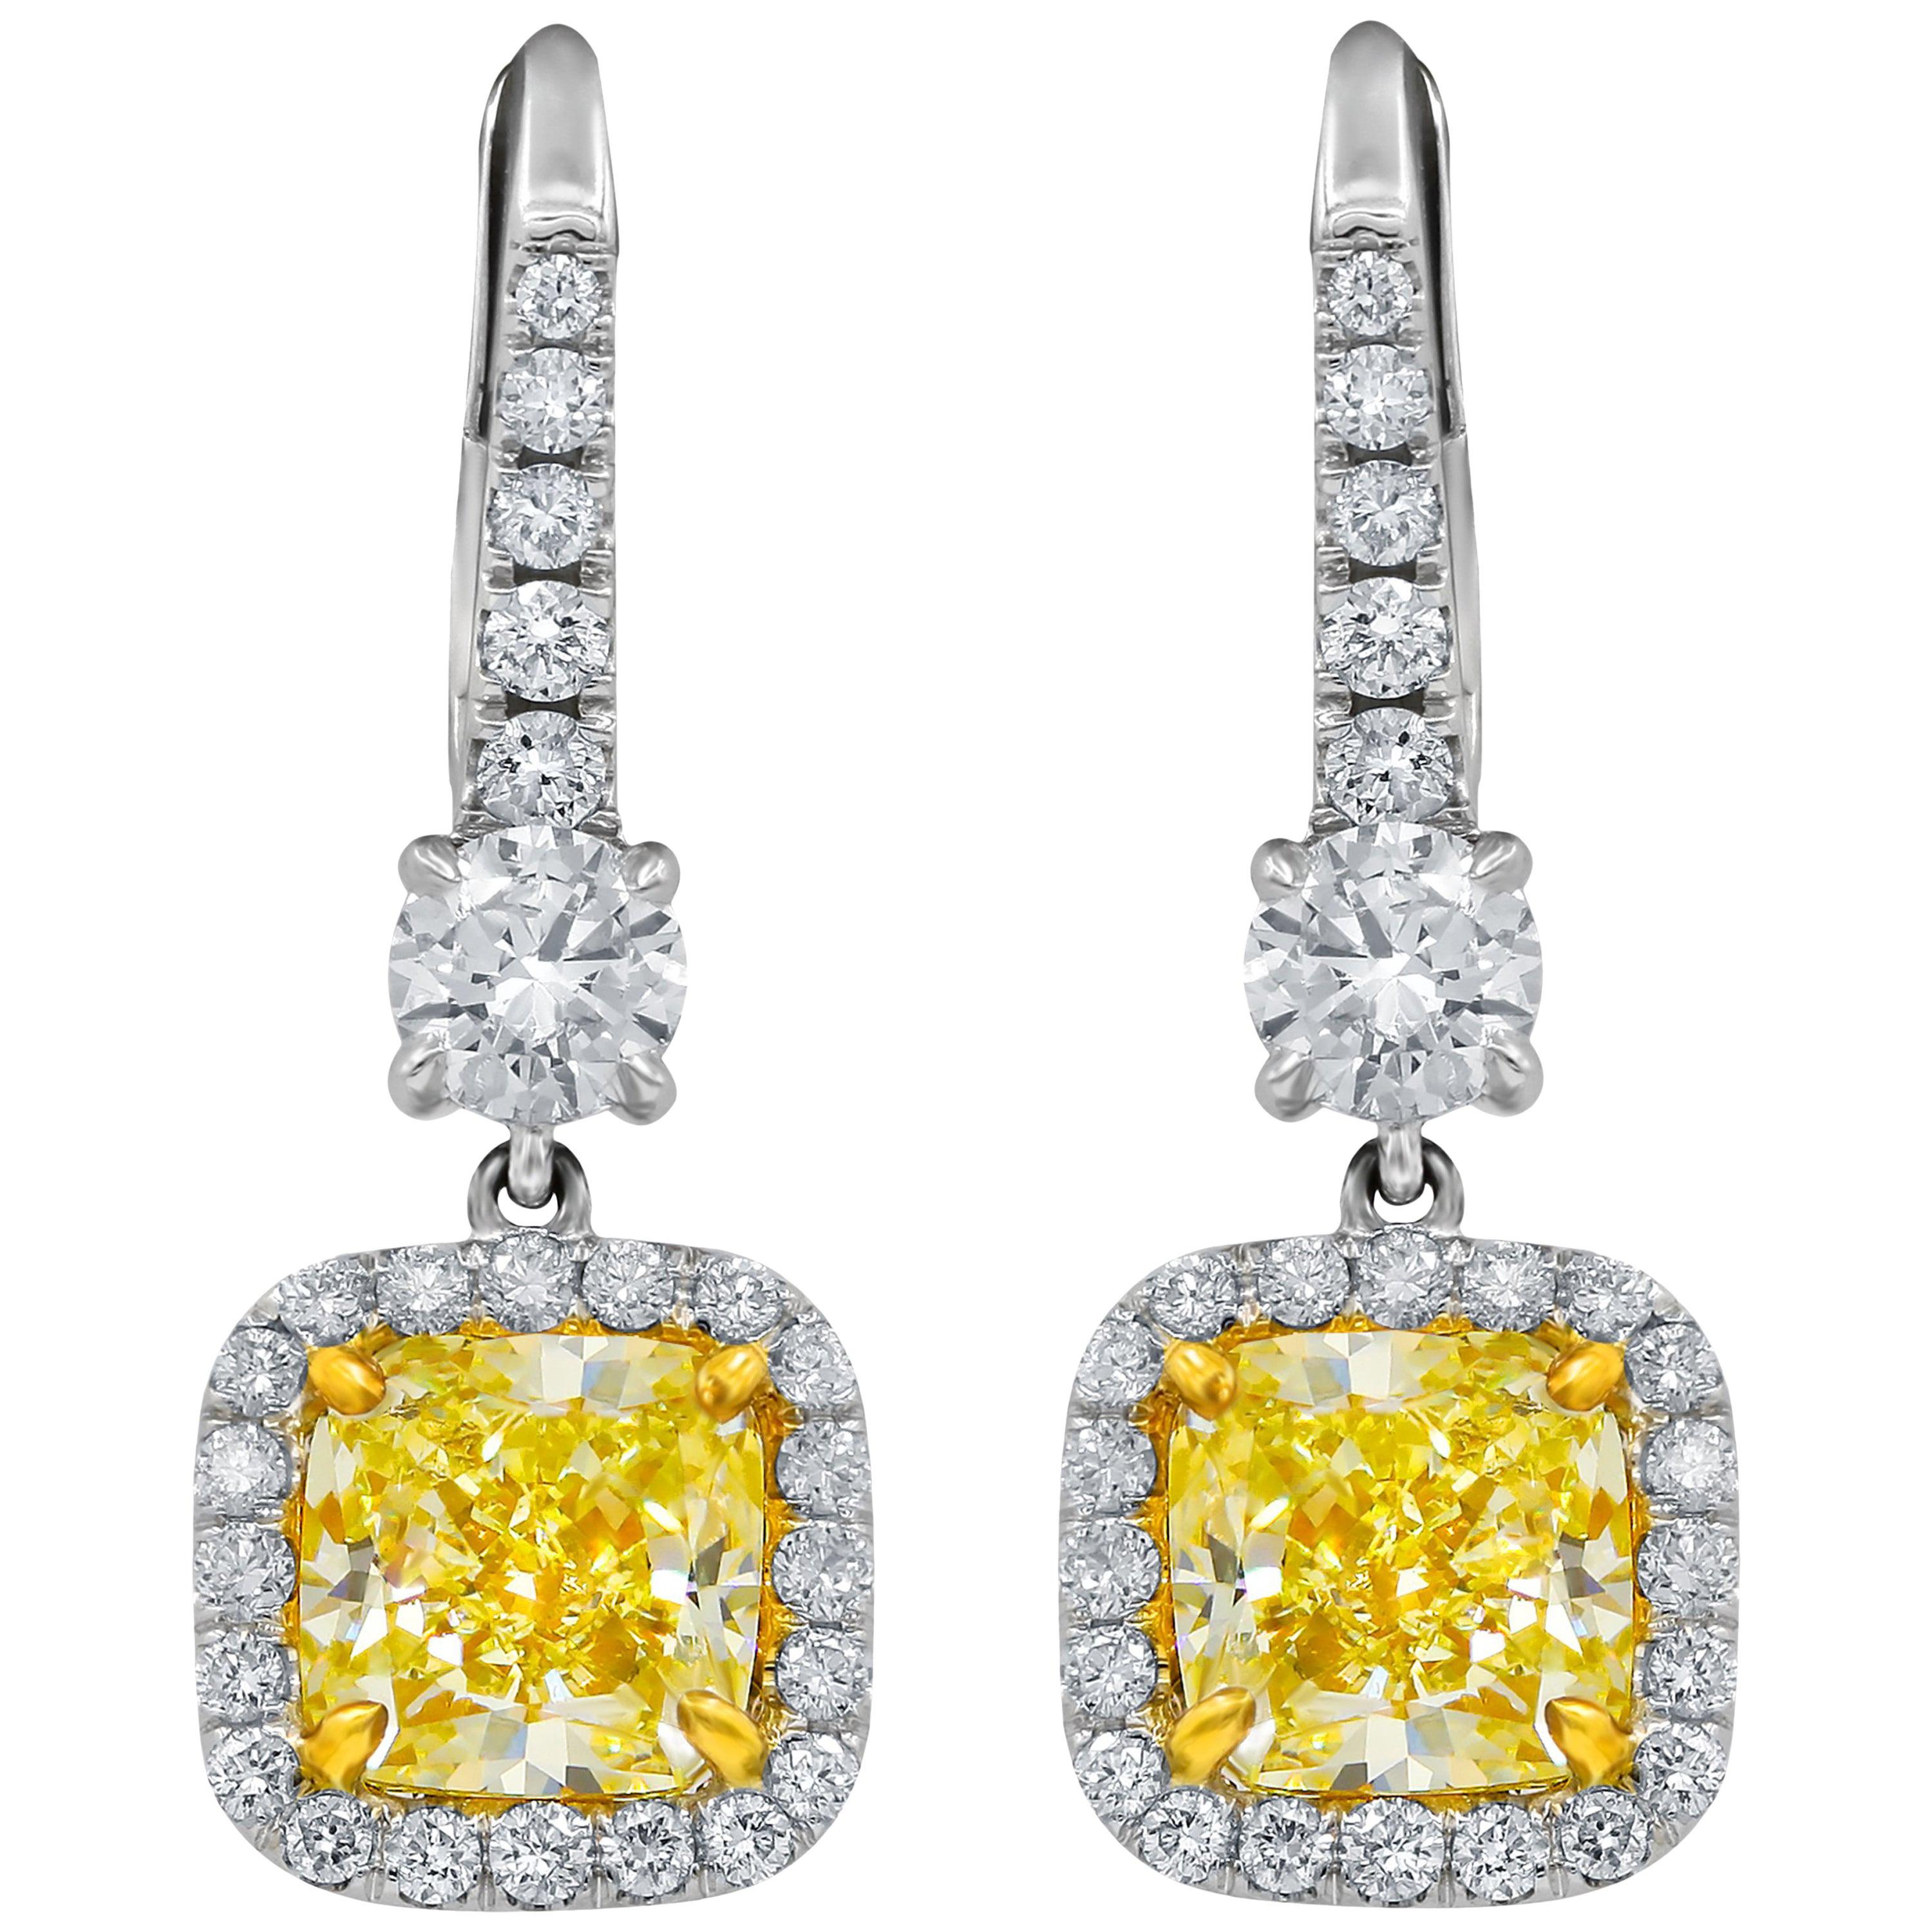 GIA Certified 2.55 Carat Canary Yellow Diamond Earrings